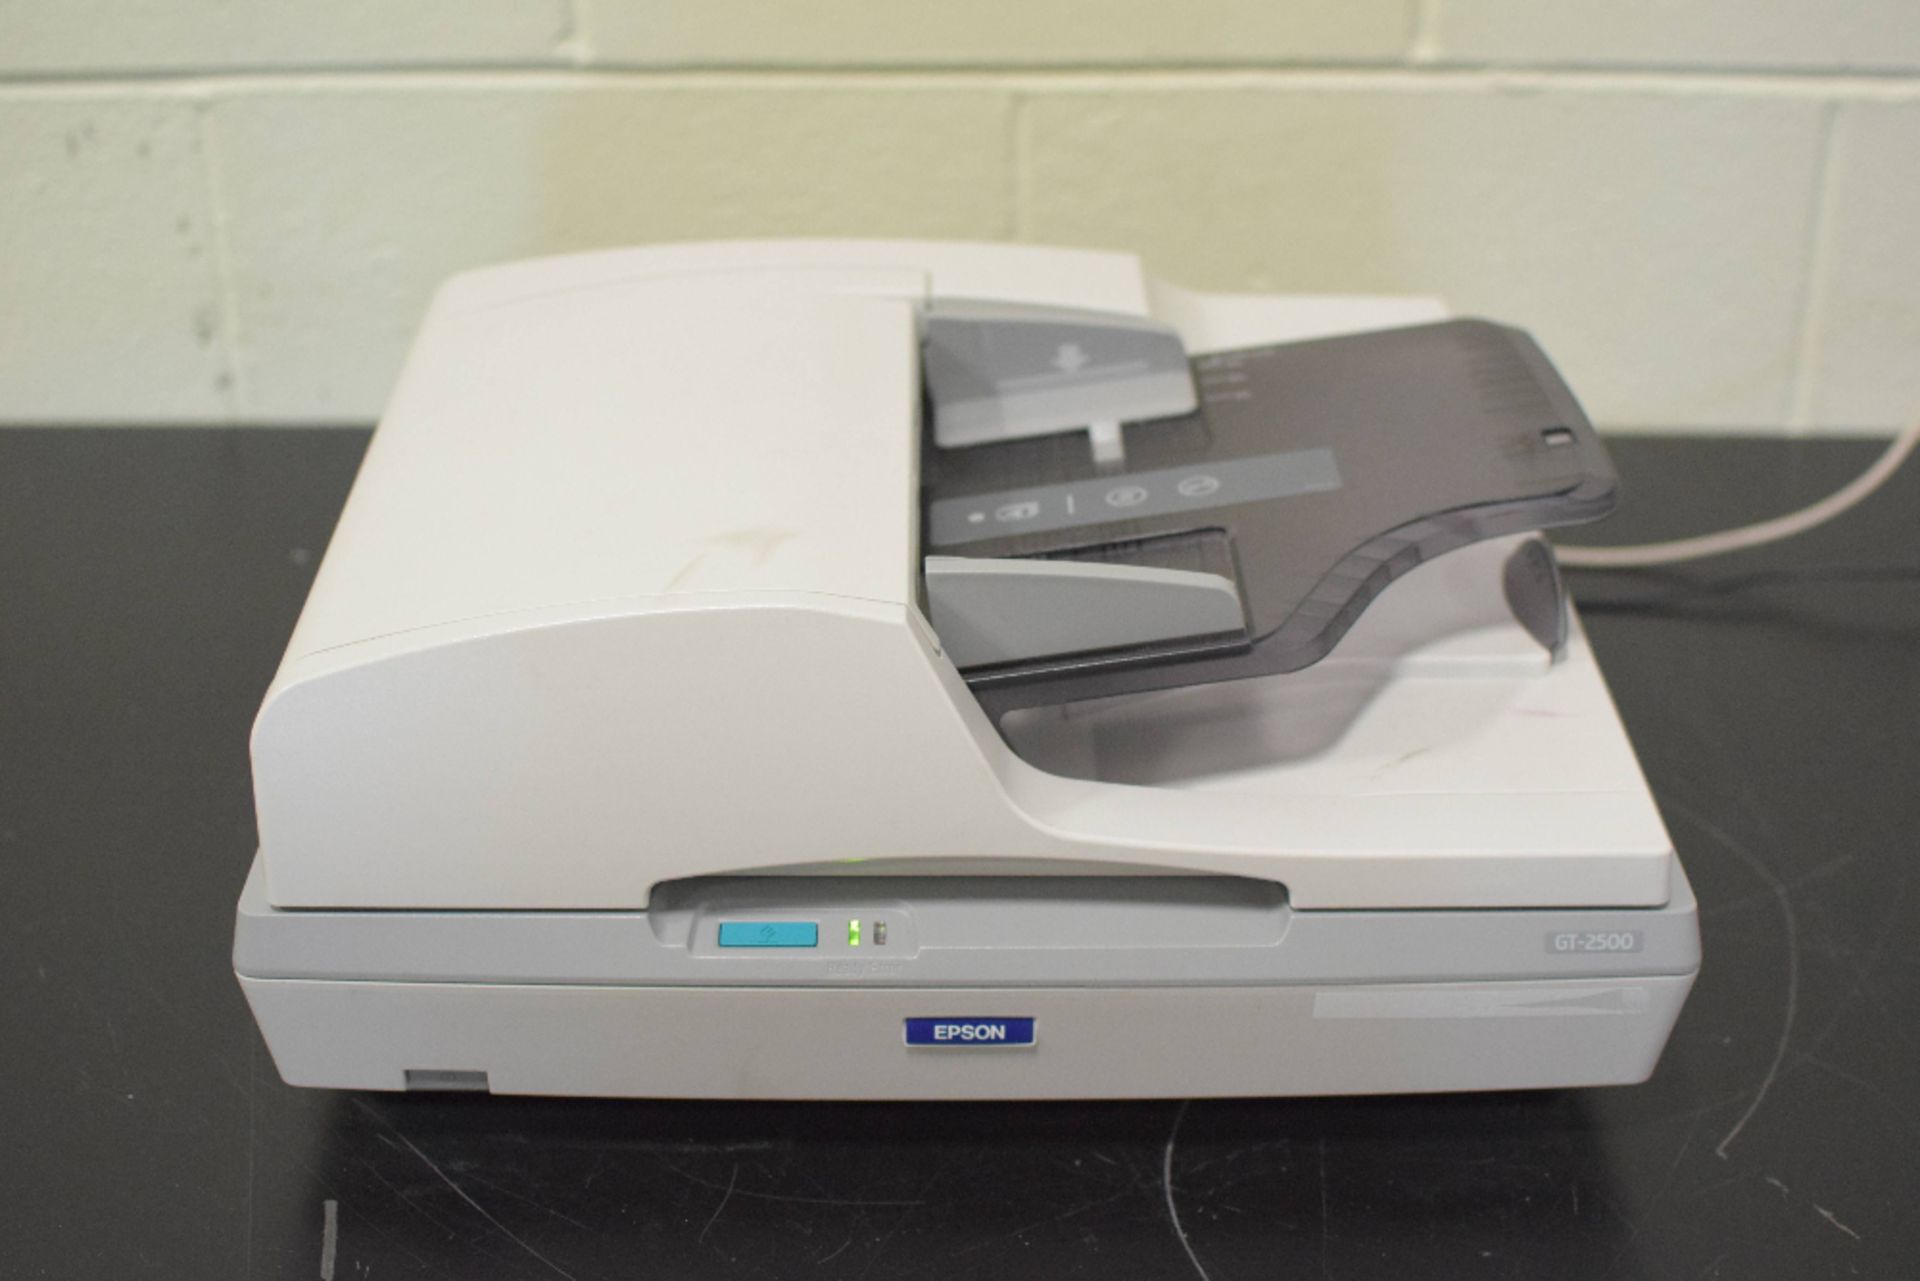 Epson GT-2500 Scanner